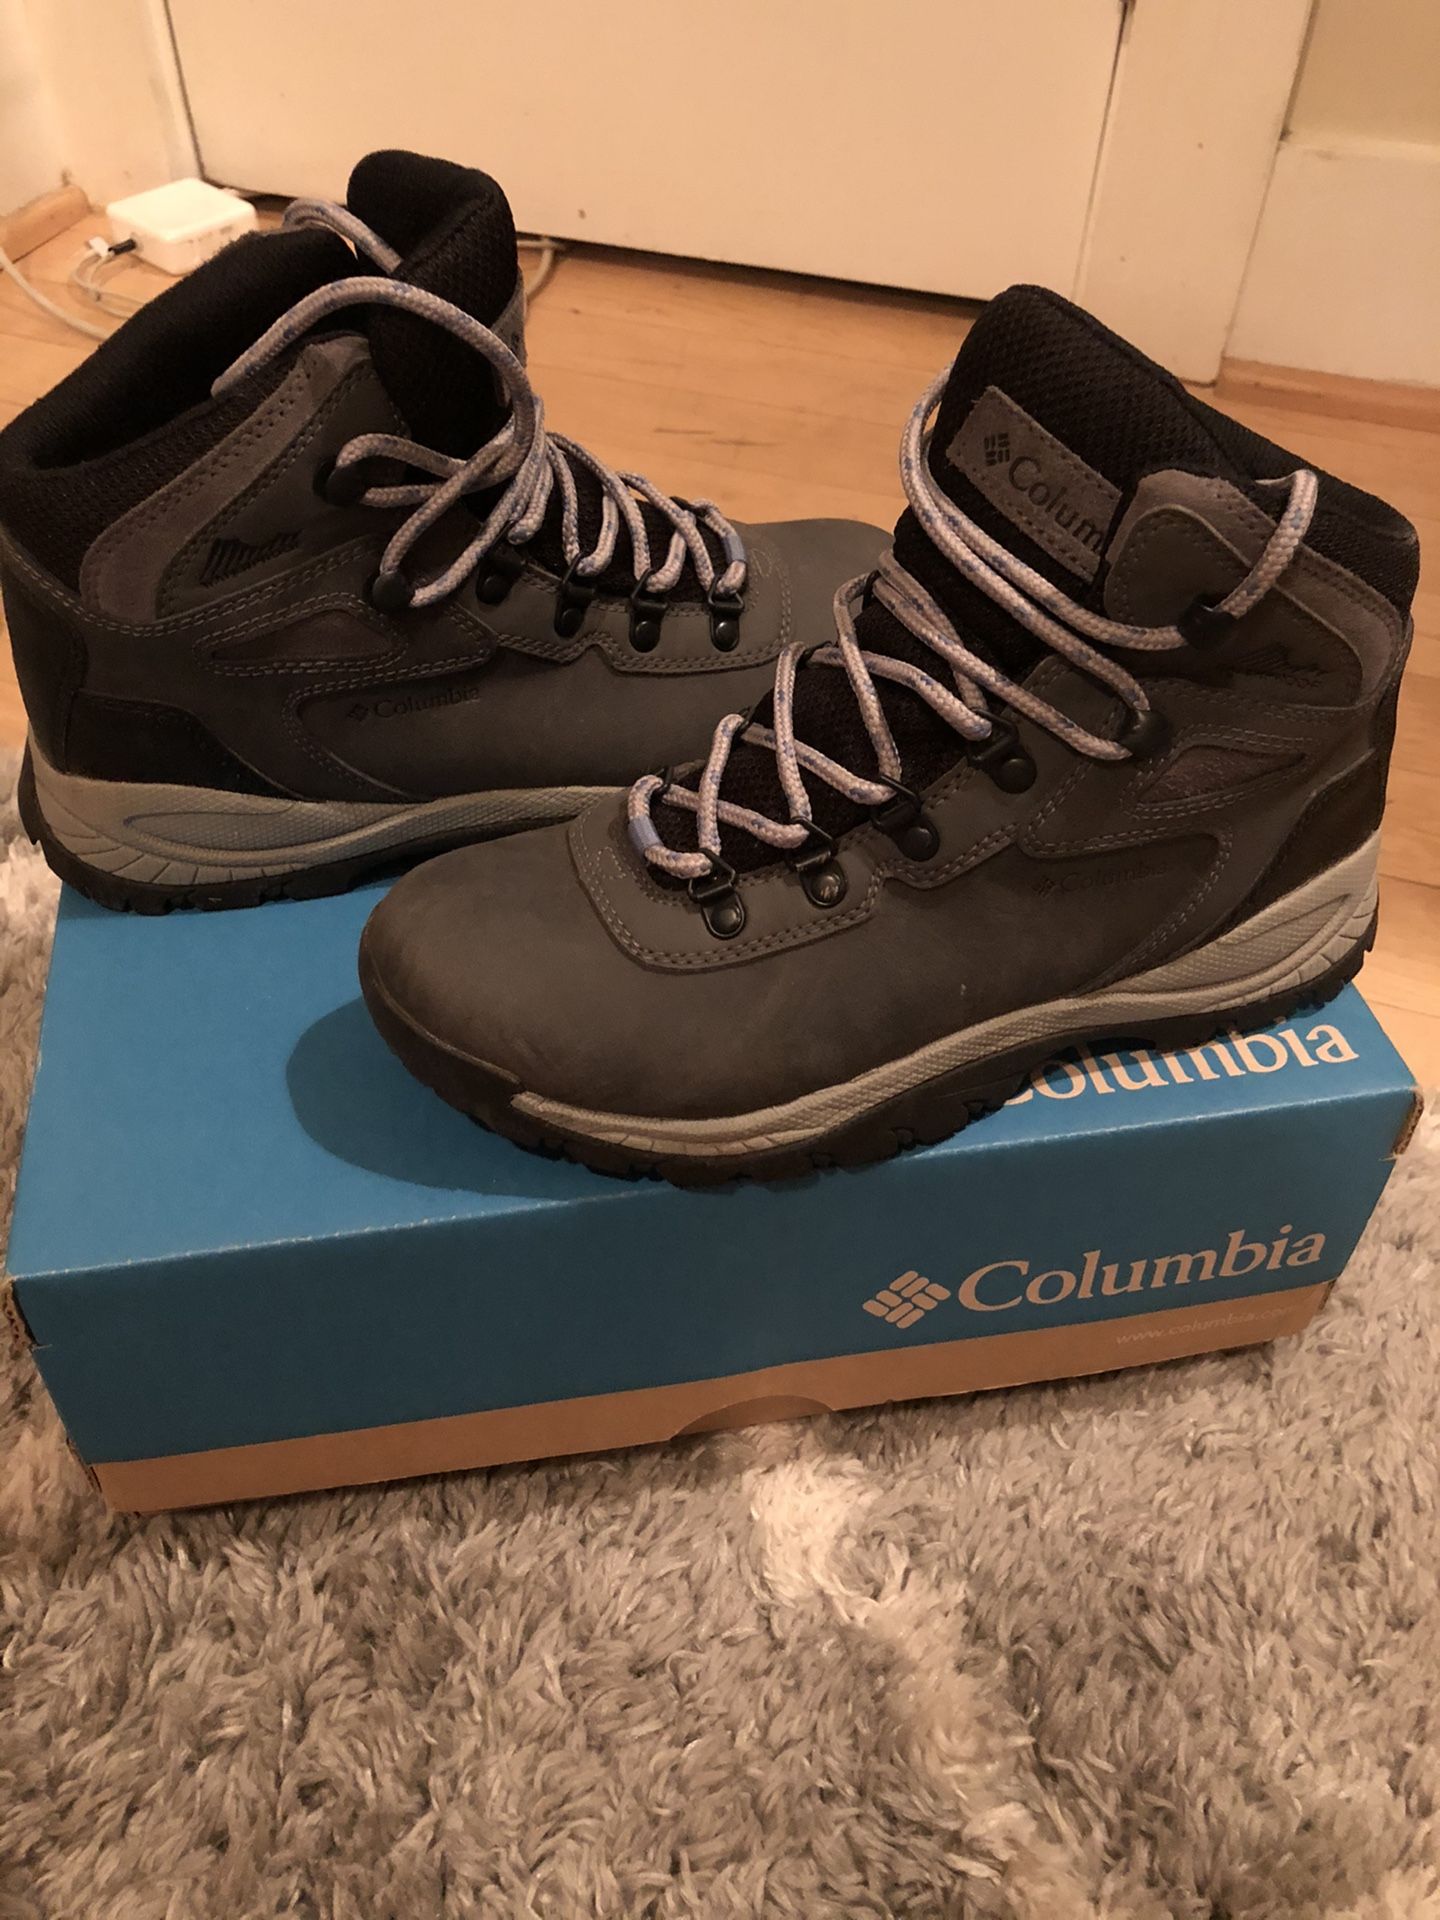 Columbia Hiking Boots Like NEW - Women’s Size 7.5